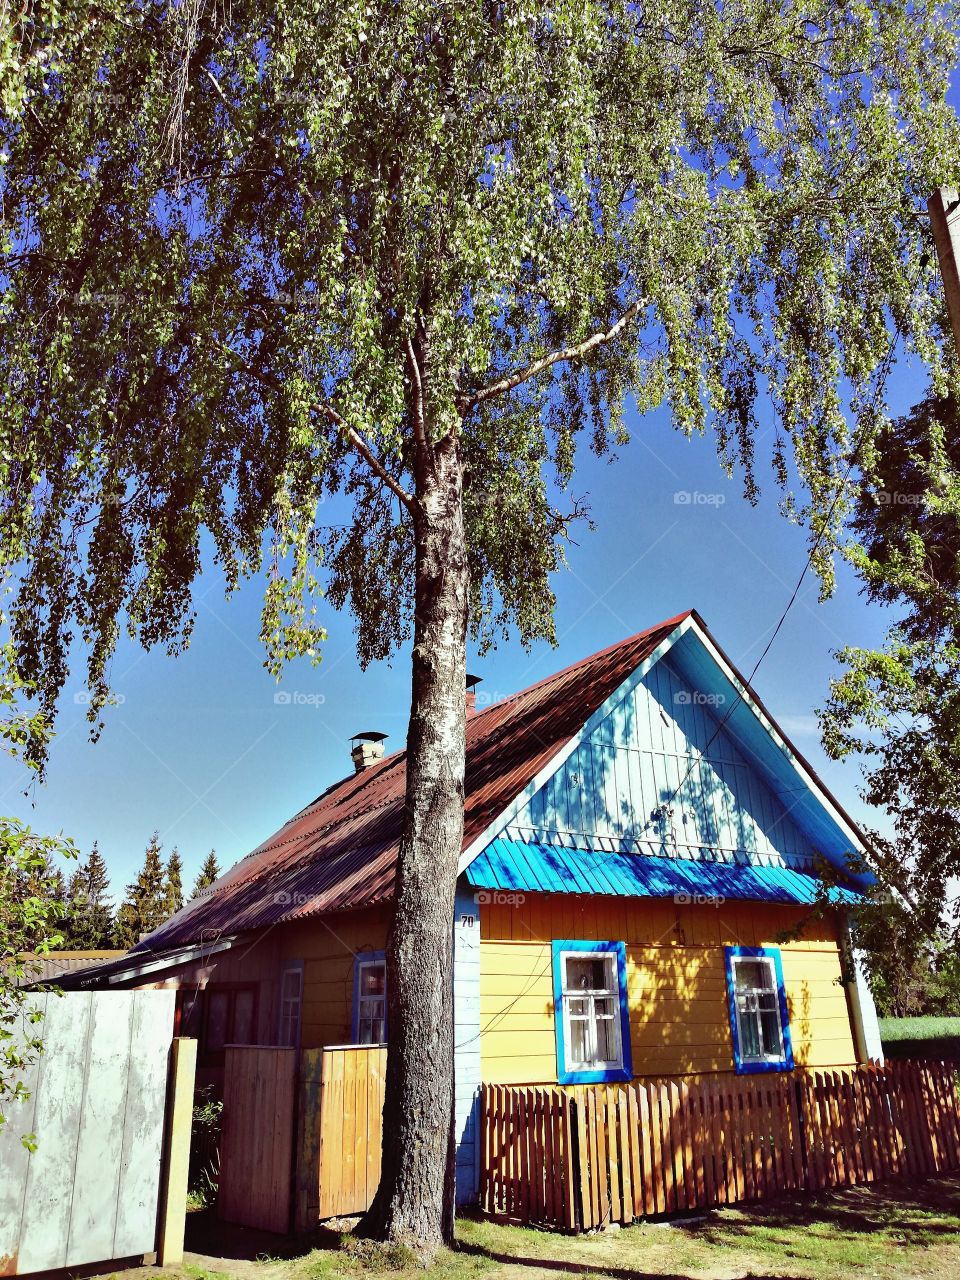 Granny's house in Belarus